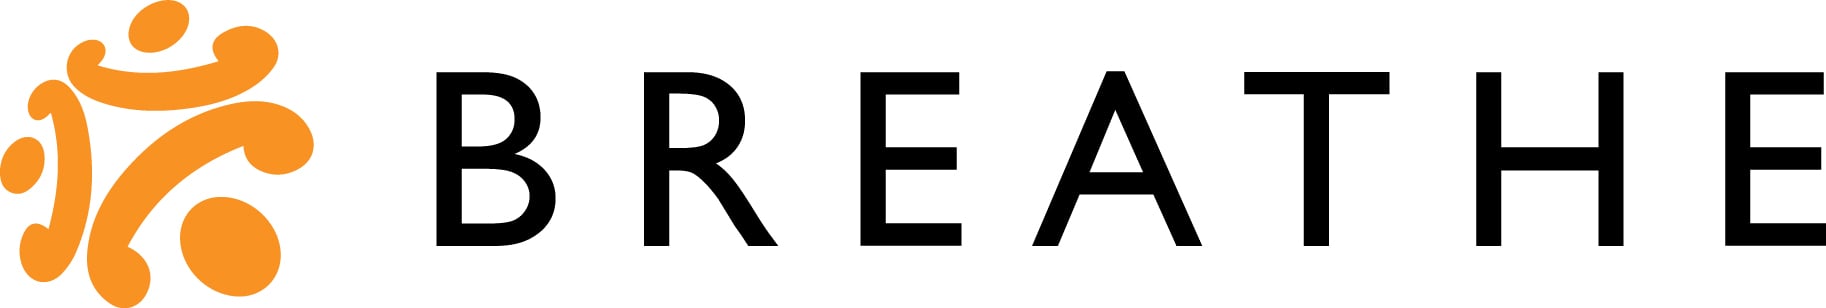 breathe energy logo